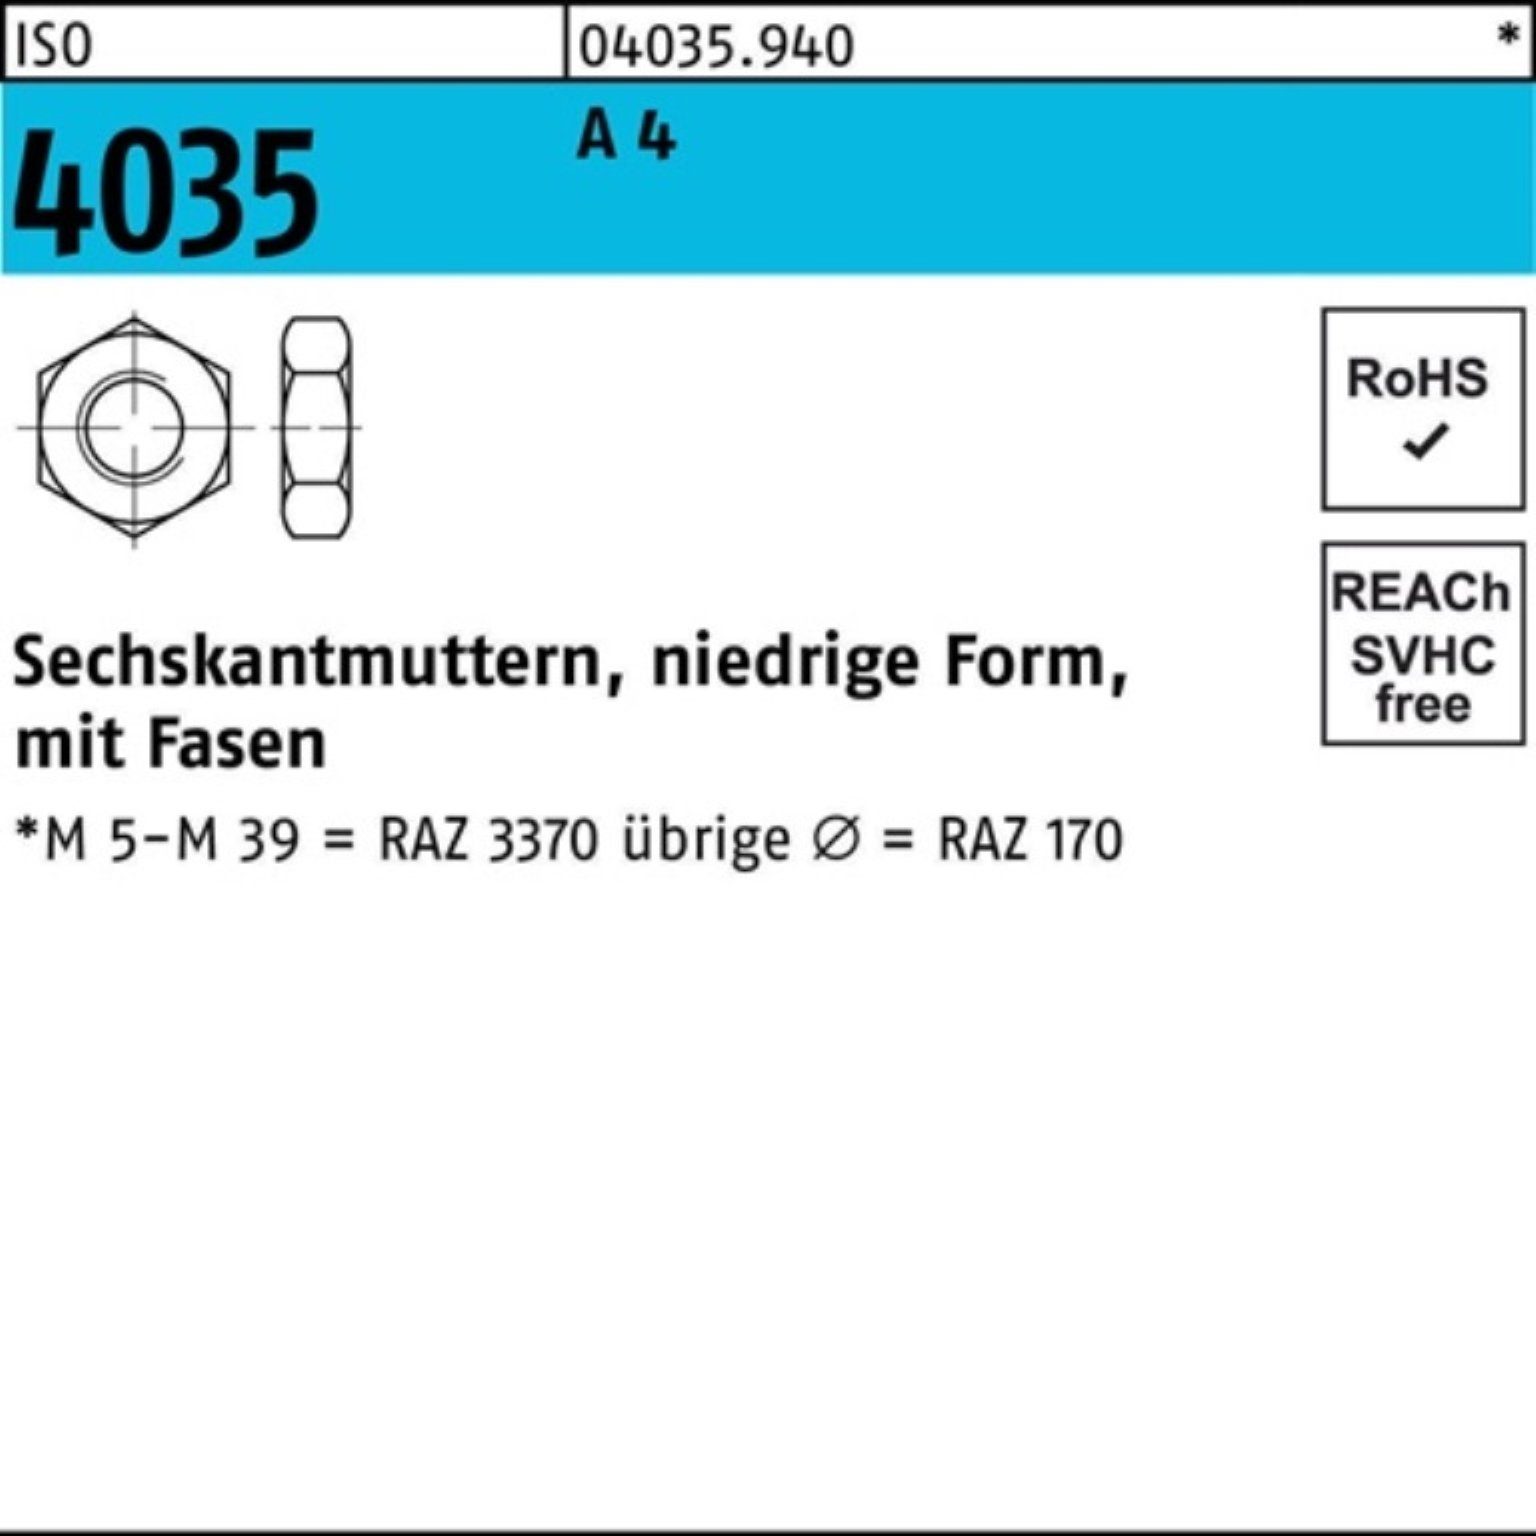 Reyher Muttern 100er 4035 niedrig 4 Stück Sechskantmutter A Fasen 10 ISO Pack IS M24